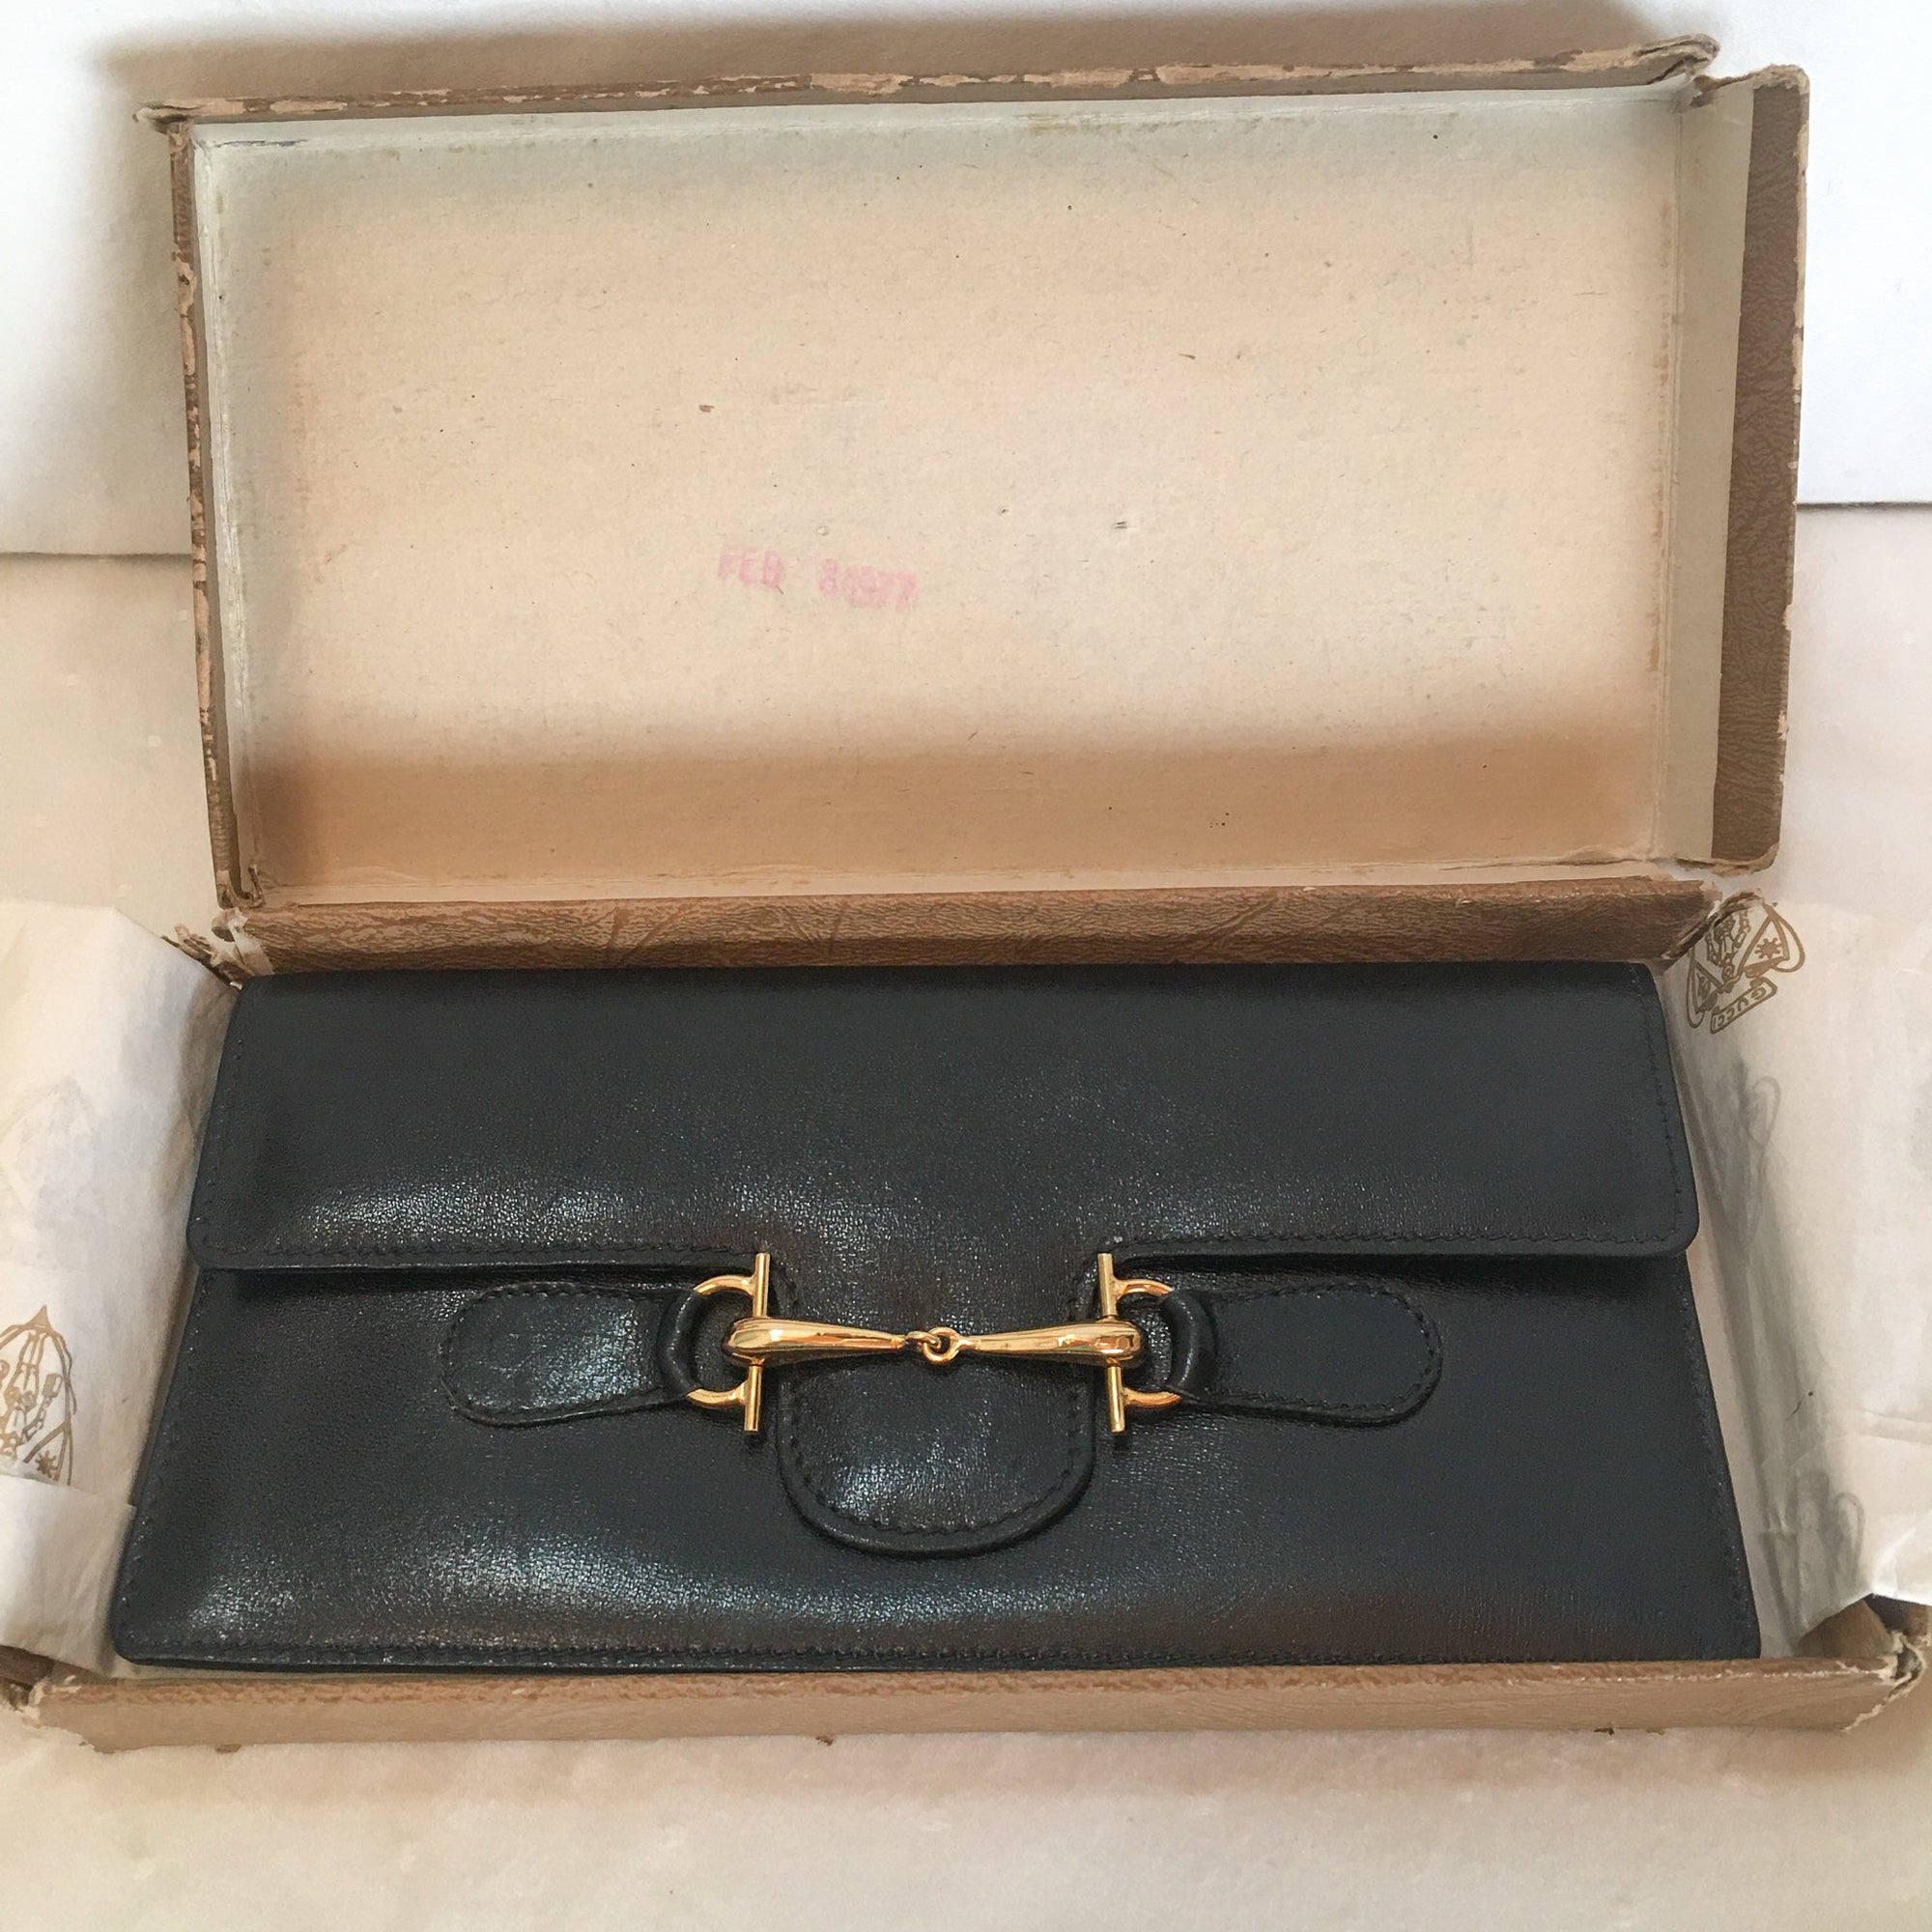 Vintage Black Leather Gucci Wallet / Clutch in Original Box